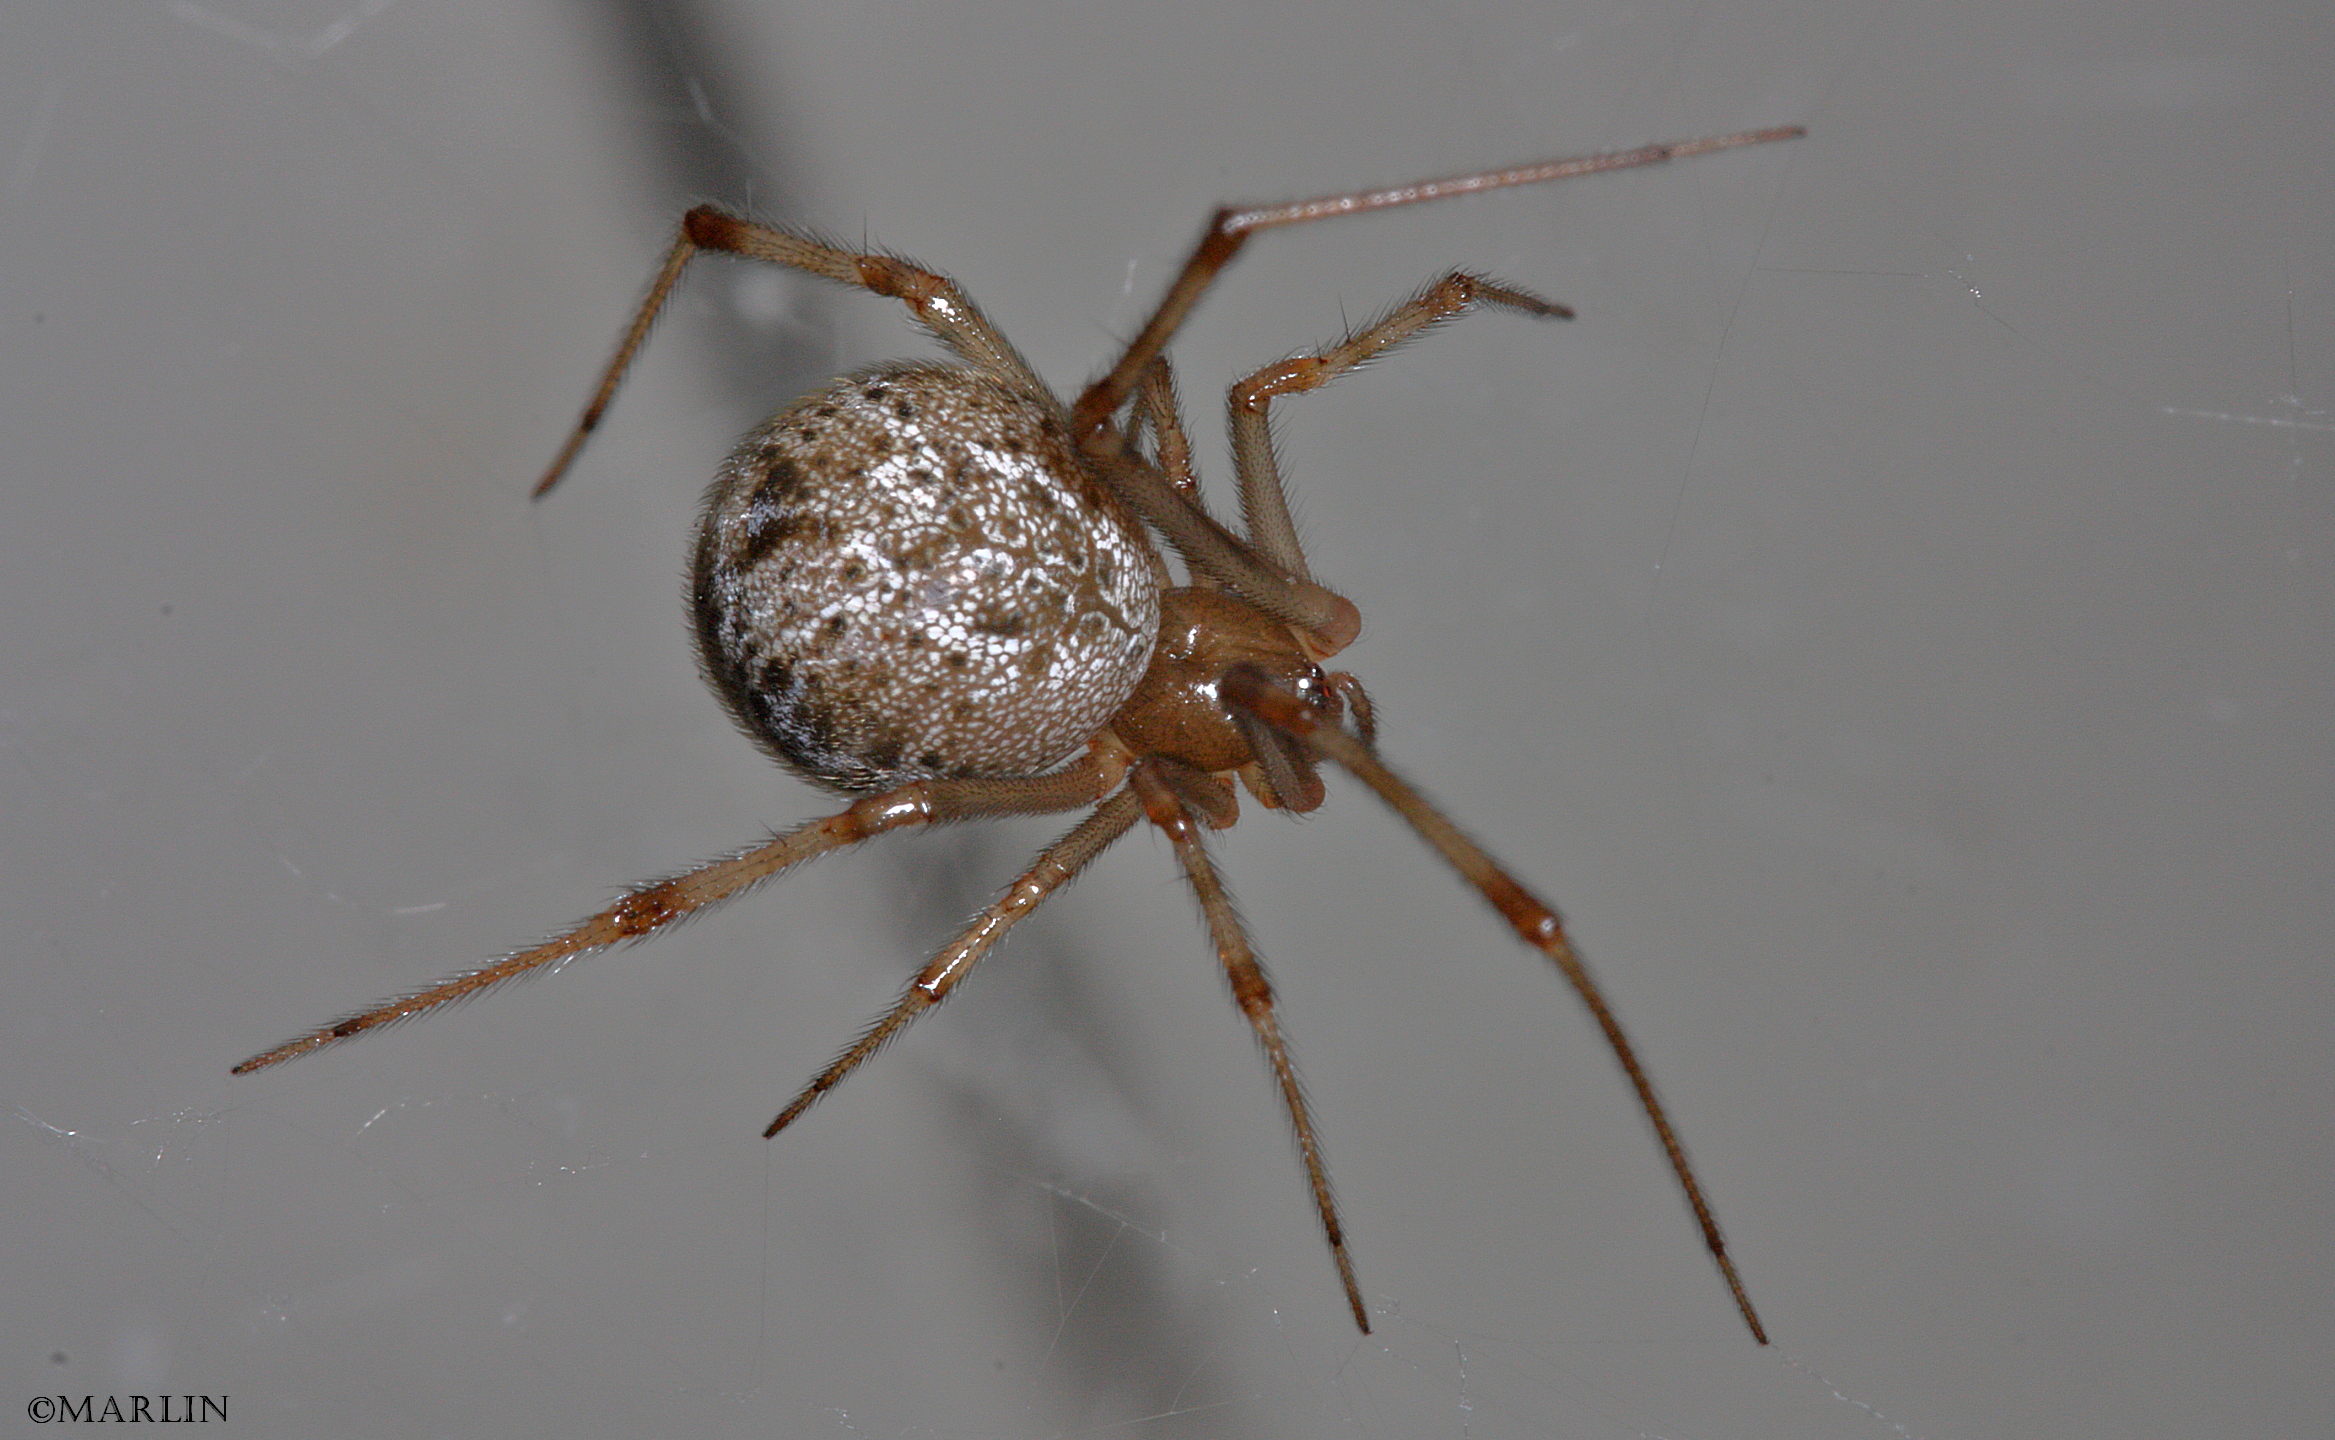 Female house spider